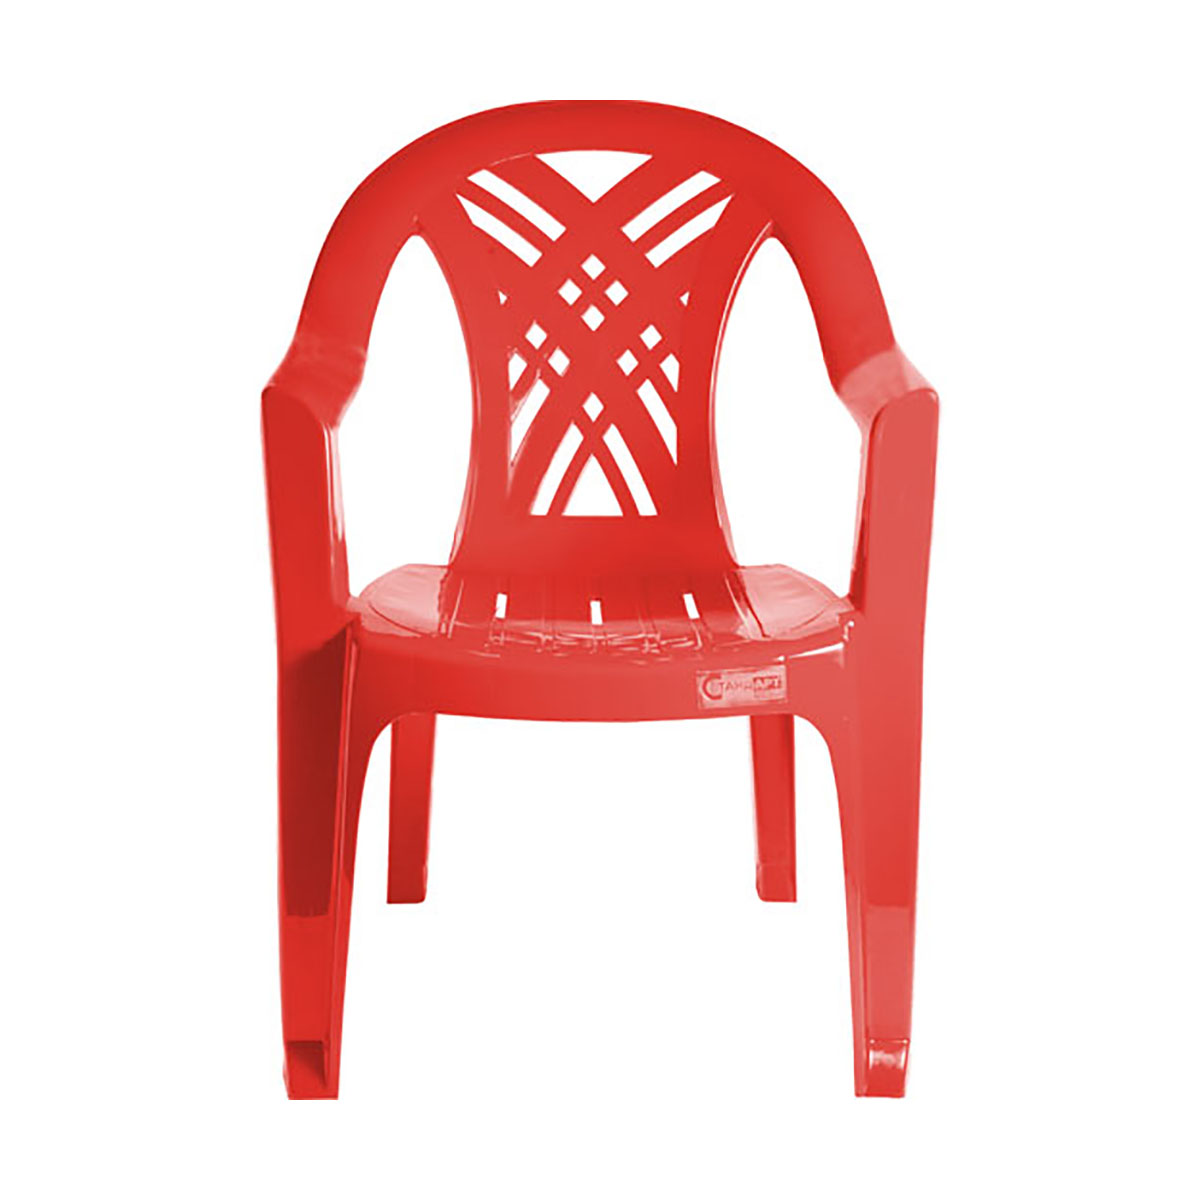 Садовое кресло Стандарт пластик Престиж-2 217487 60х66х84см красный